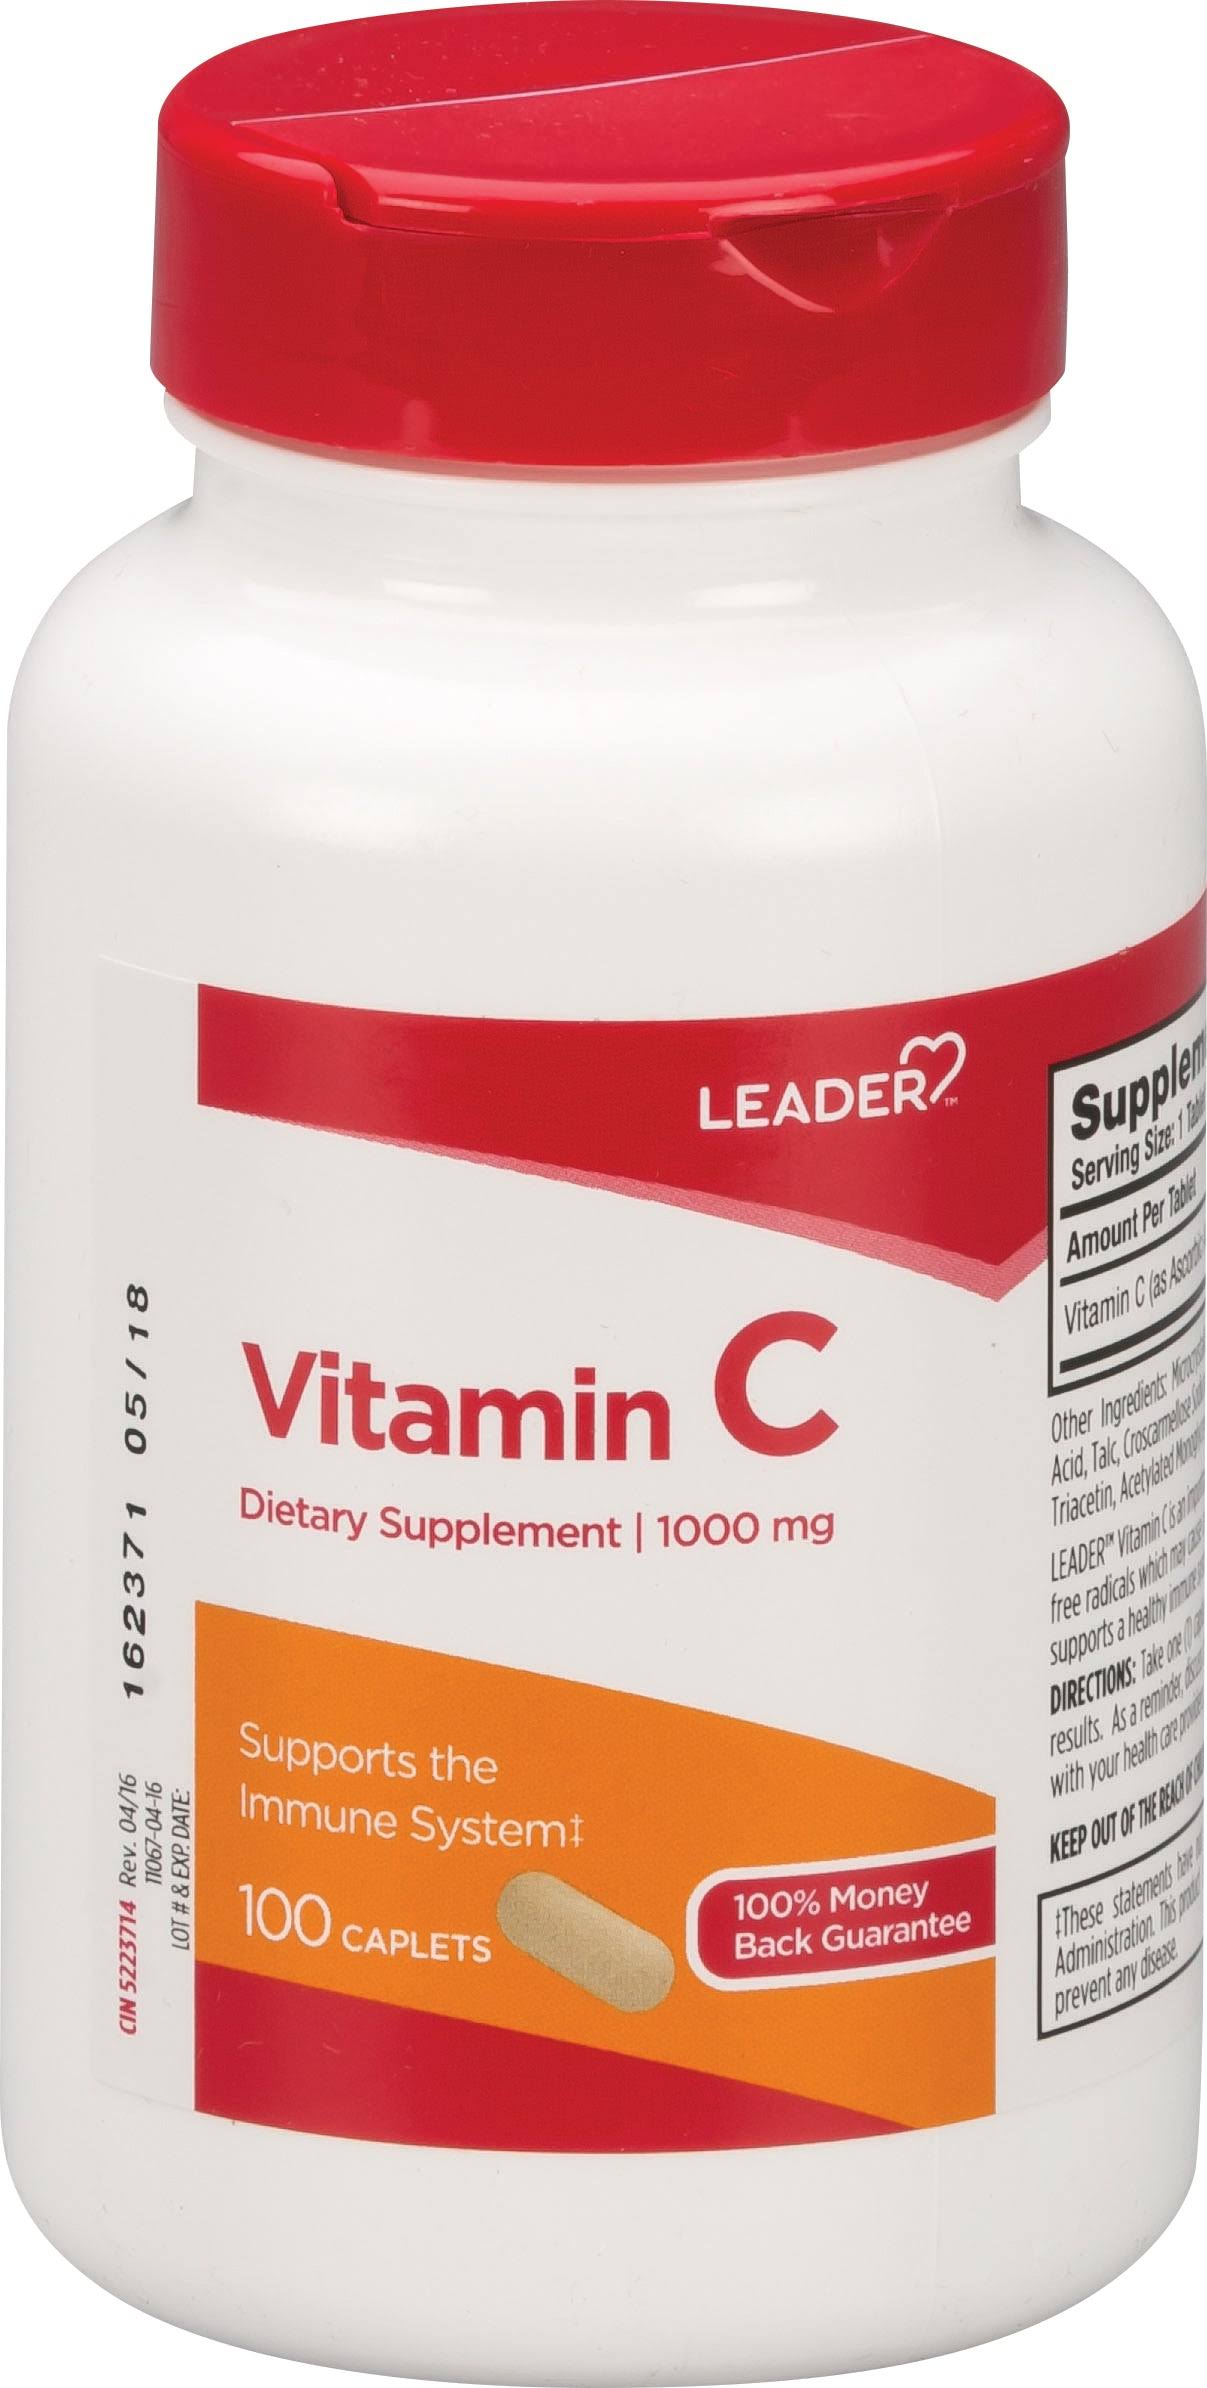 Leader Vitamin C 1000 mg Dietary Supplement, Orange Flavor, 100 Tablets